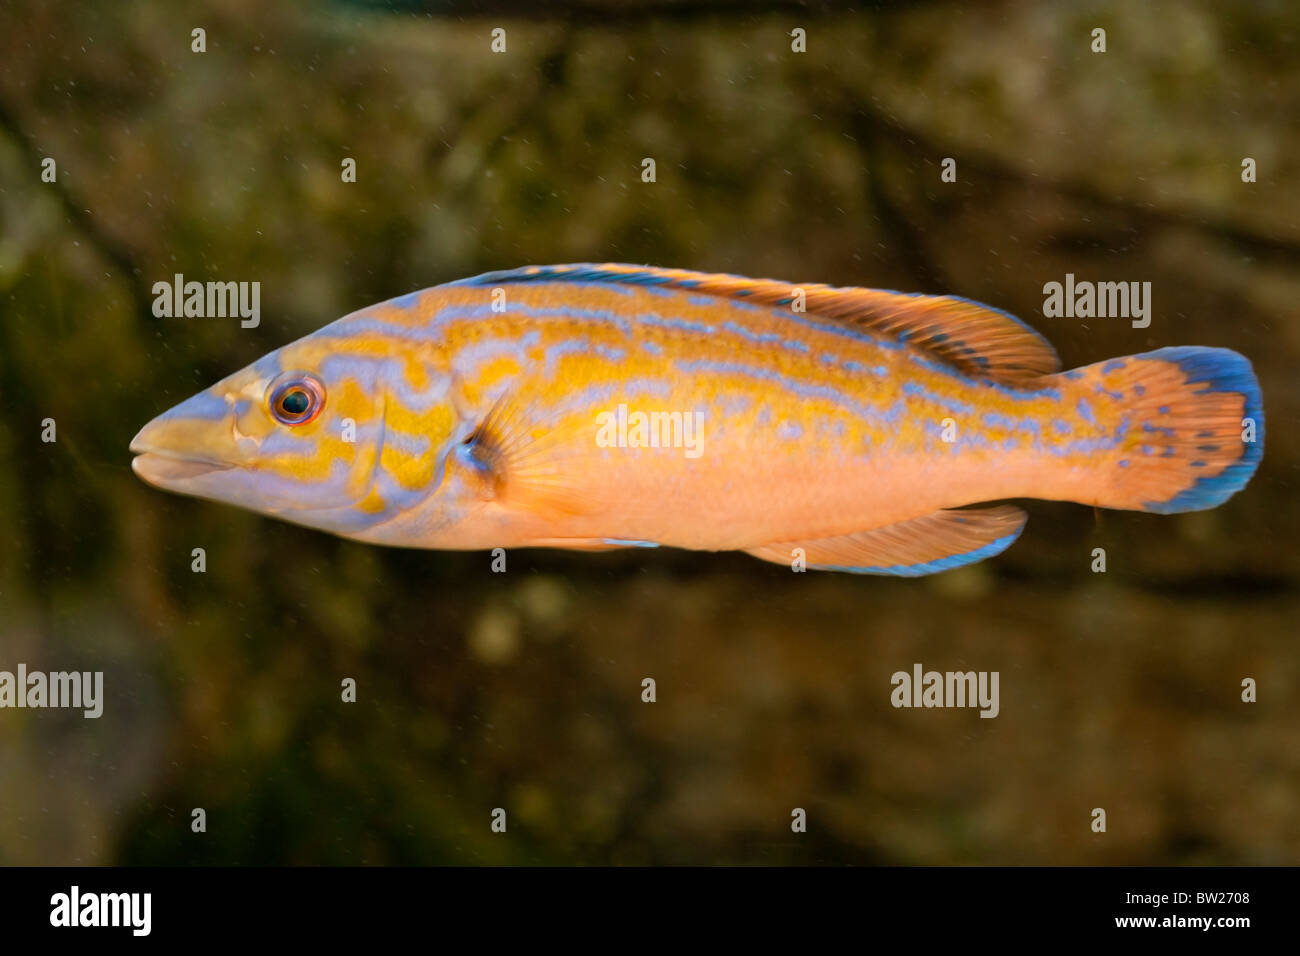 Cuckoo Wrasse fish (Labrus bimaculatus) Stock Photo